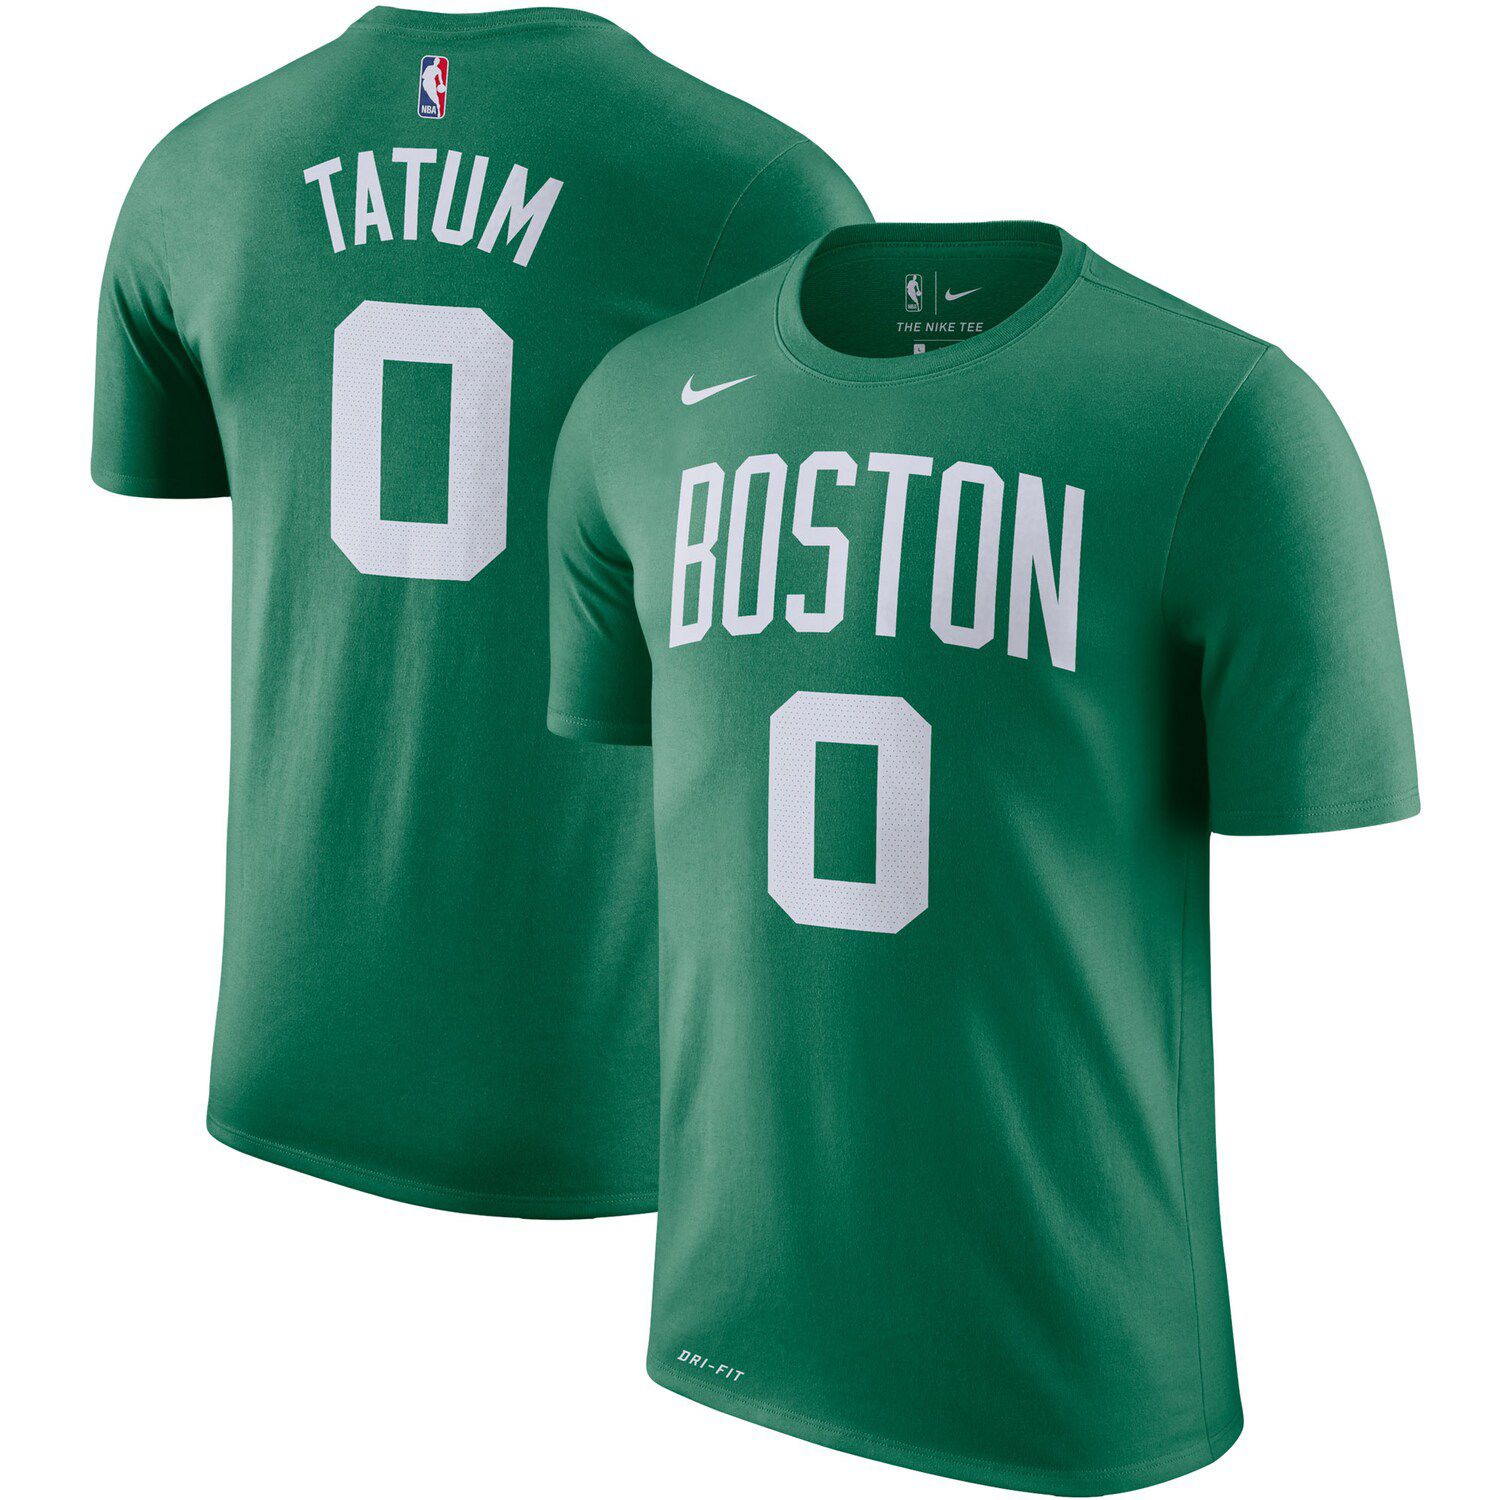 jayson tatum green jersey